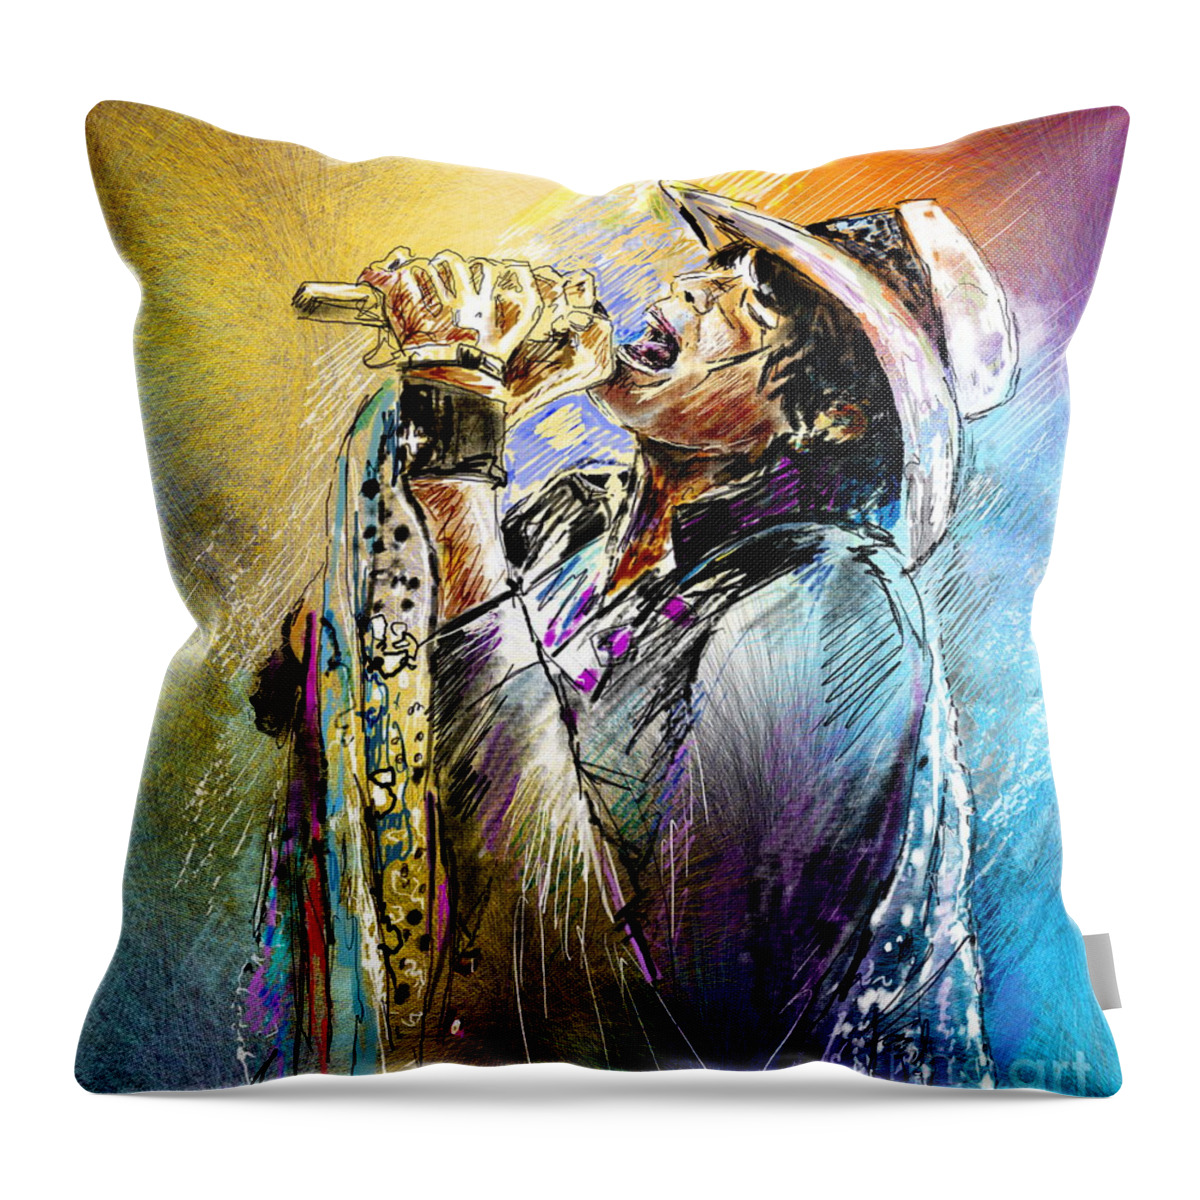 Portraits Throw Pillow featuring the painting Steven Tyler 01 Aerosmith by Miki De Goodaboom